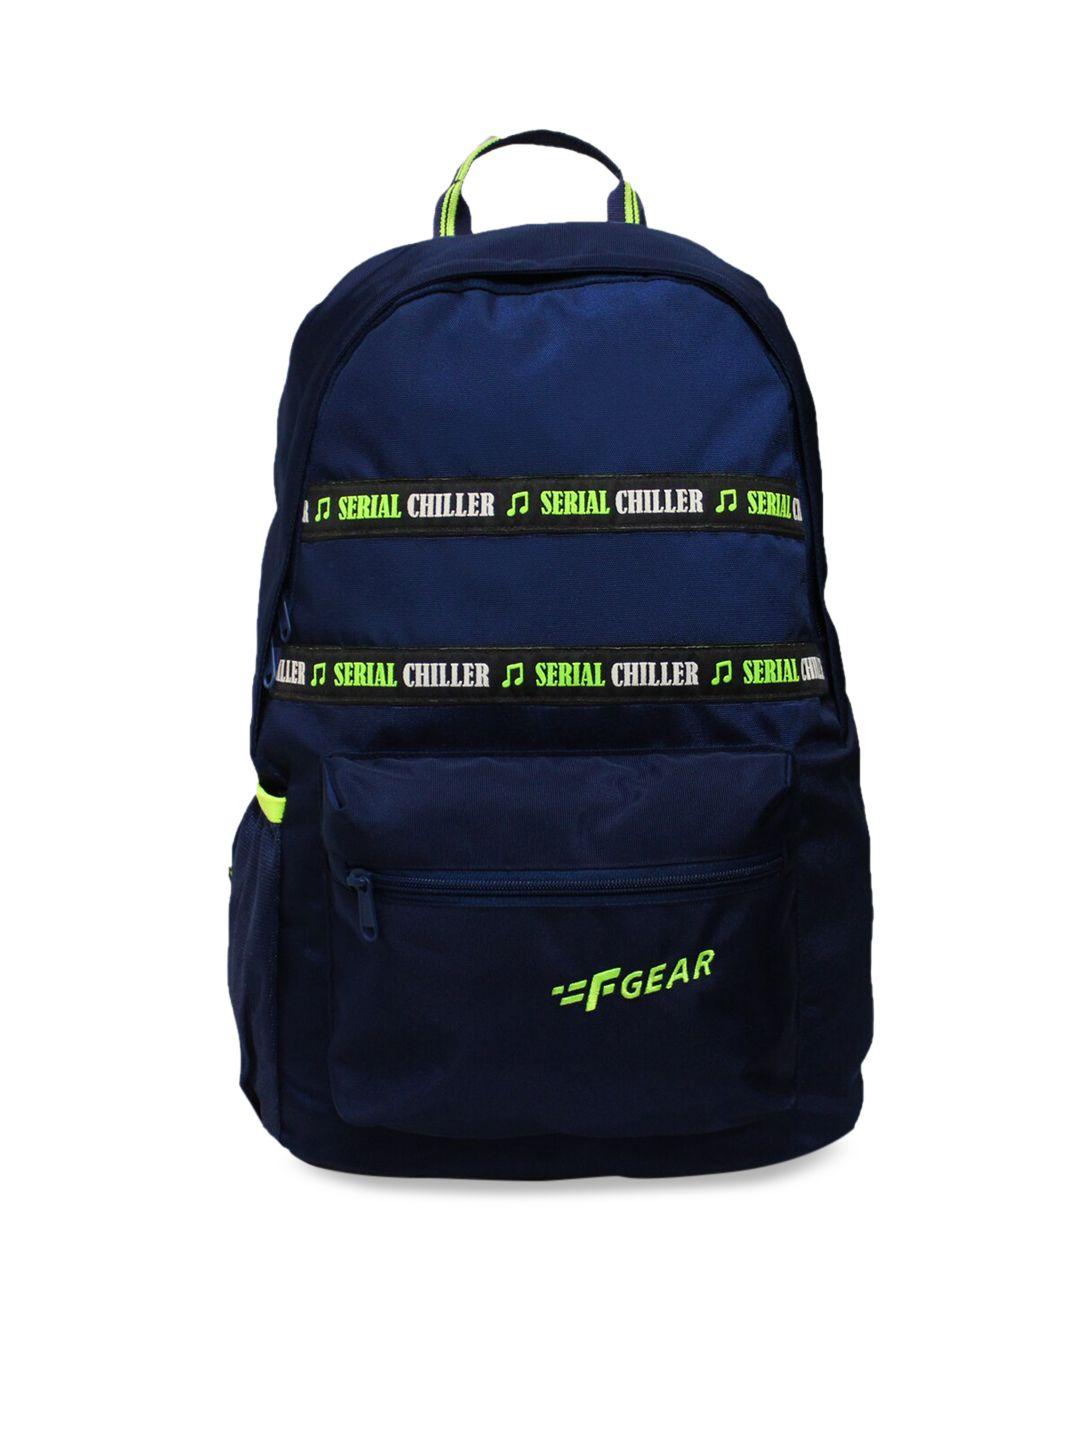 f gear unisex navy blue & green contrast detailing medium backpack